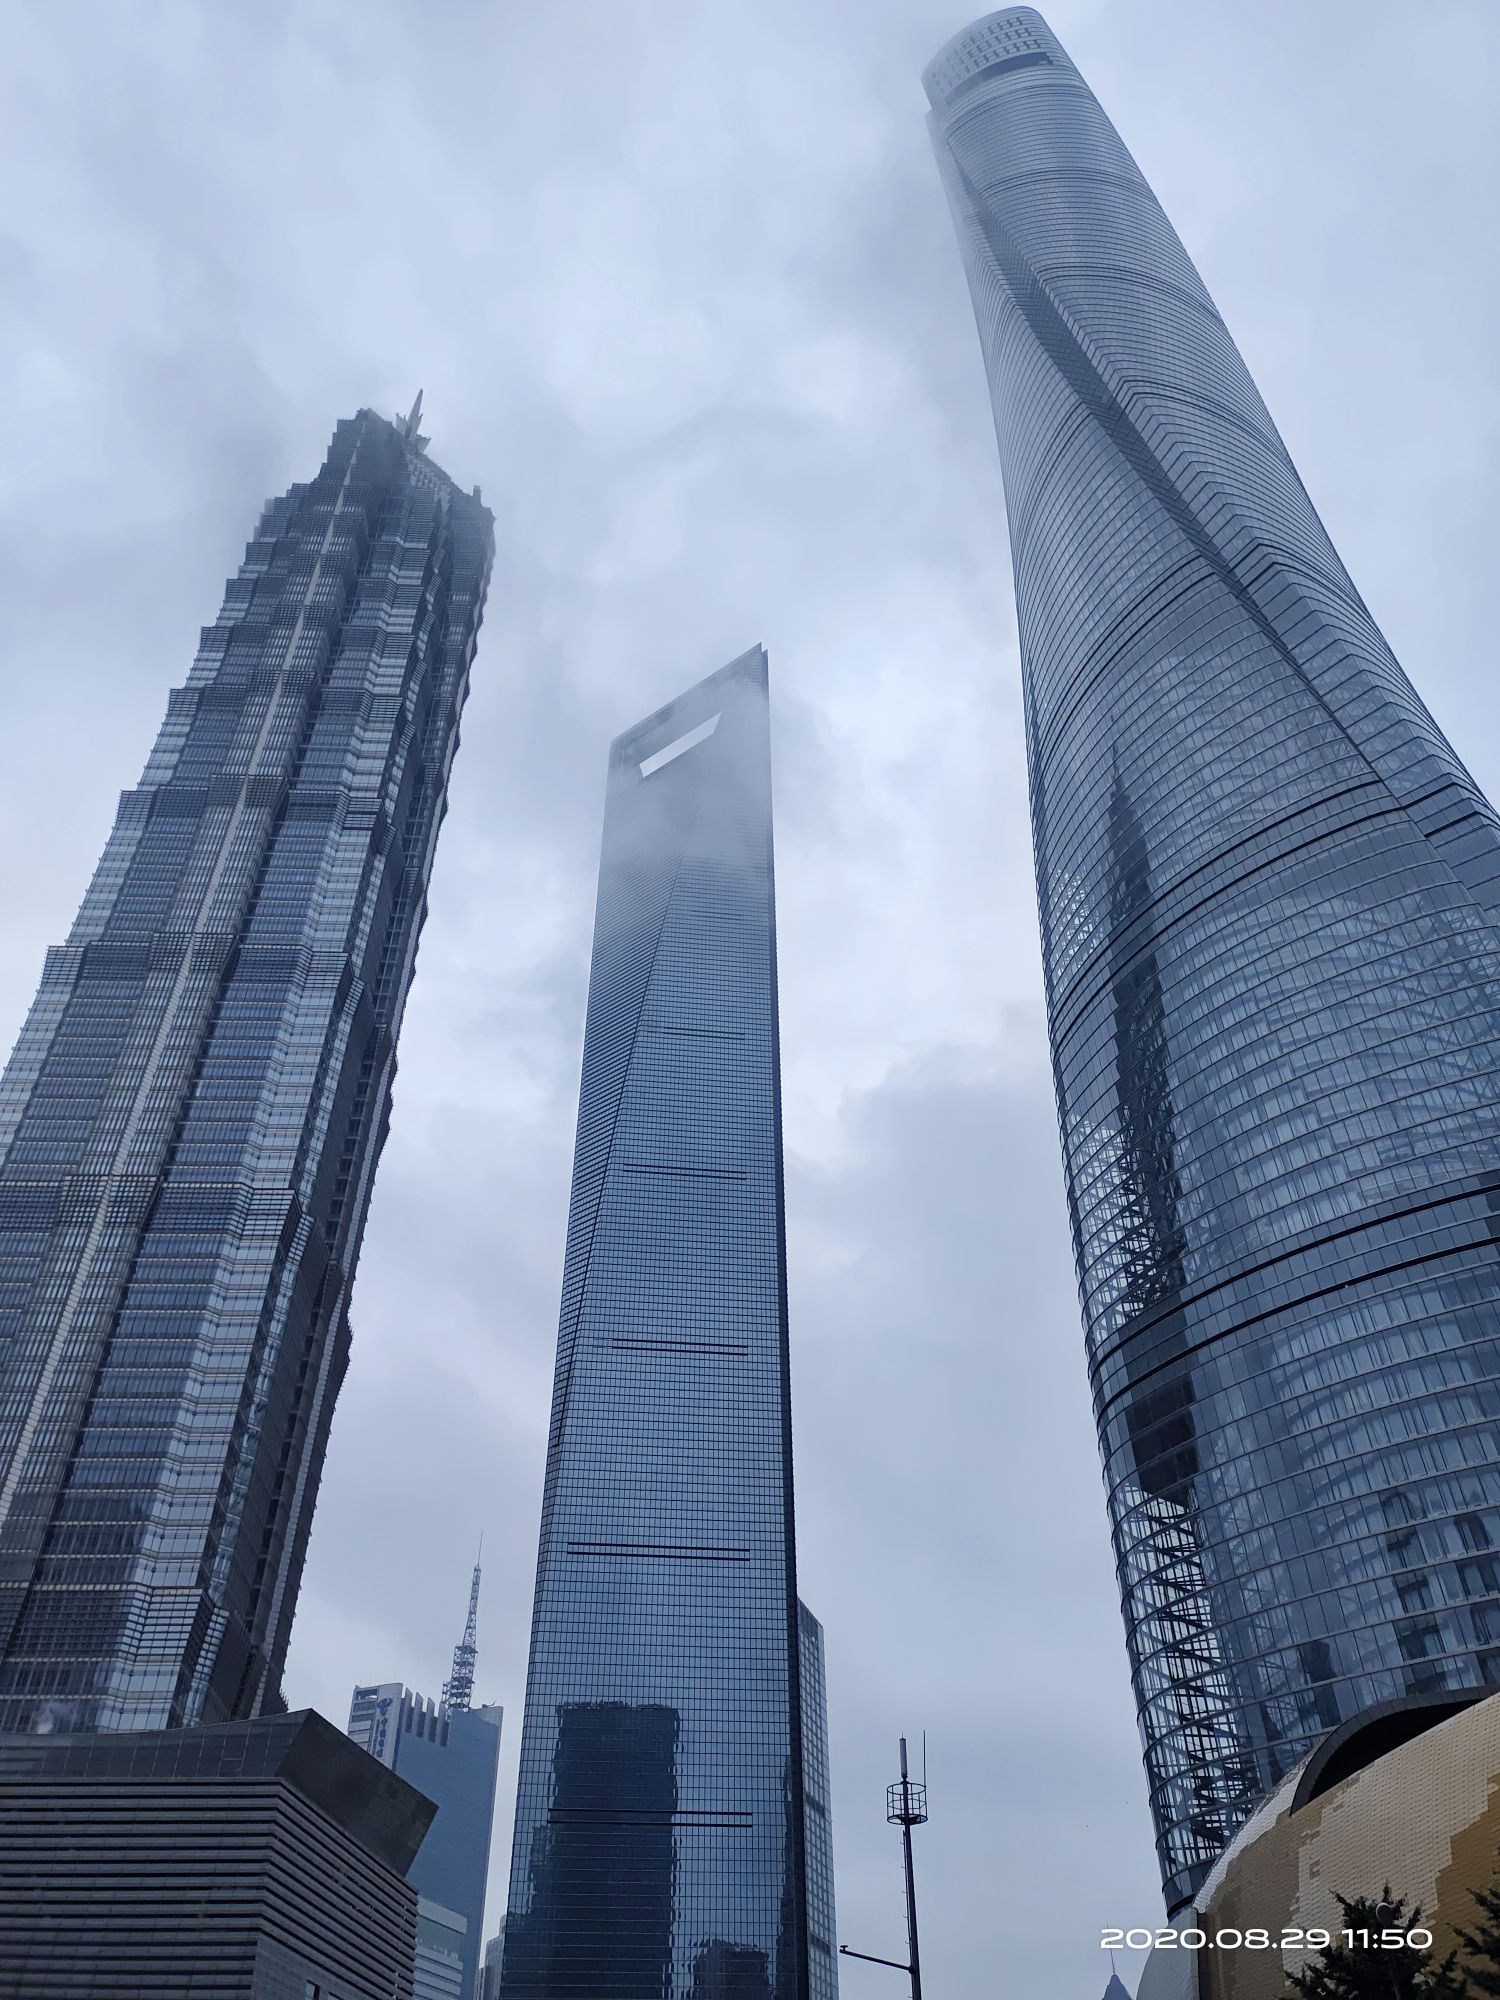 Bank of China Tower, Shanghai | Office | Projects | NIKKEN SEKKEI LTD